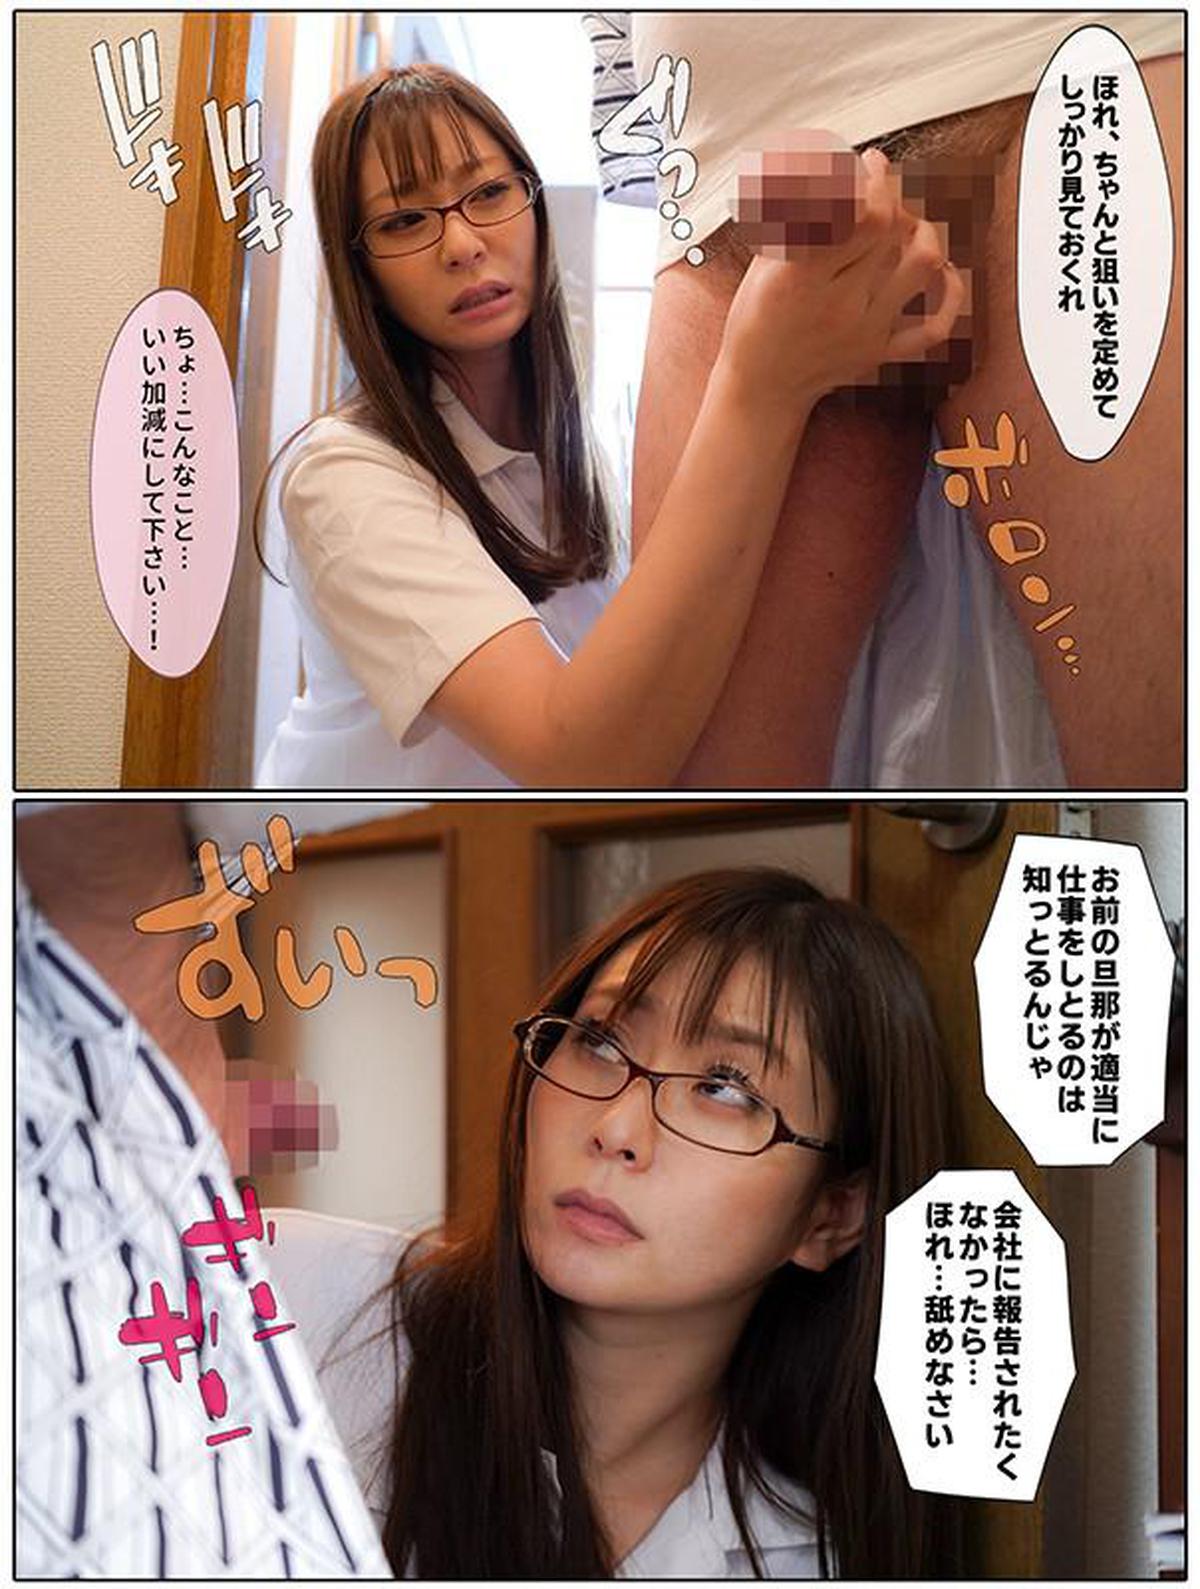 MRSS-087 ภรรยาที่จริงจังเกินไปไม่เหมาะสำหรับงานดูแลระยะยาว Aoi Yurika